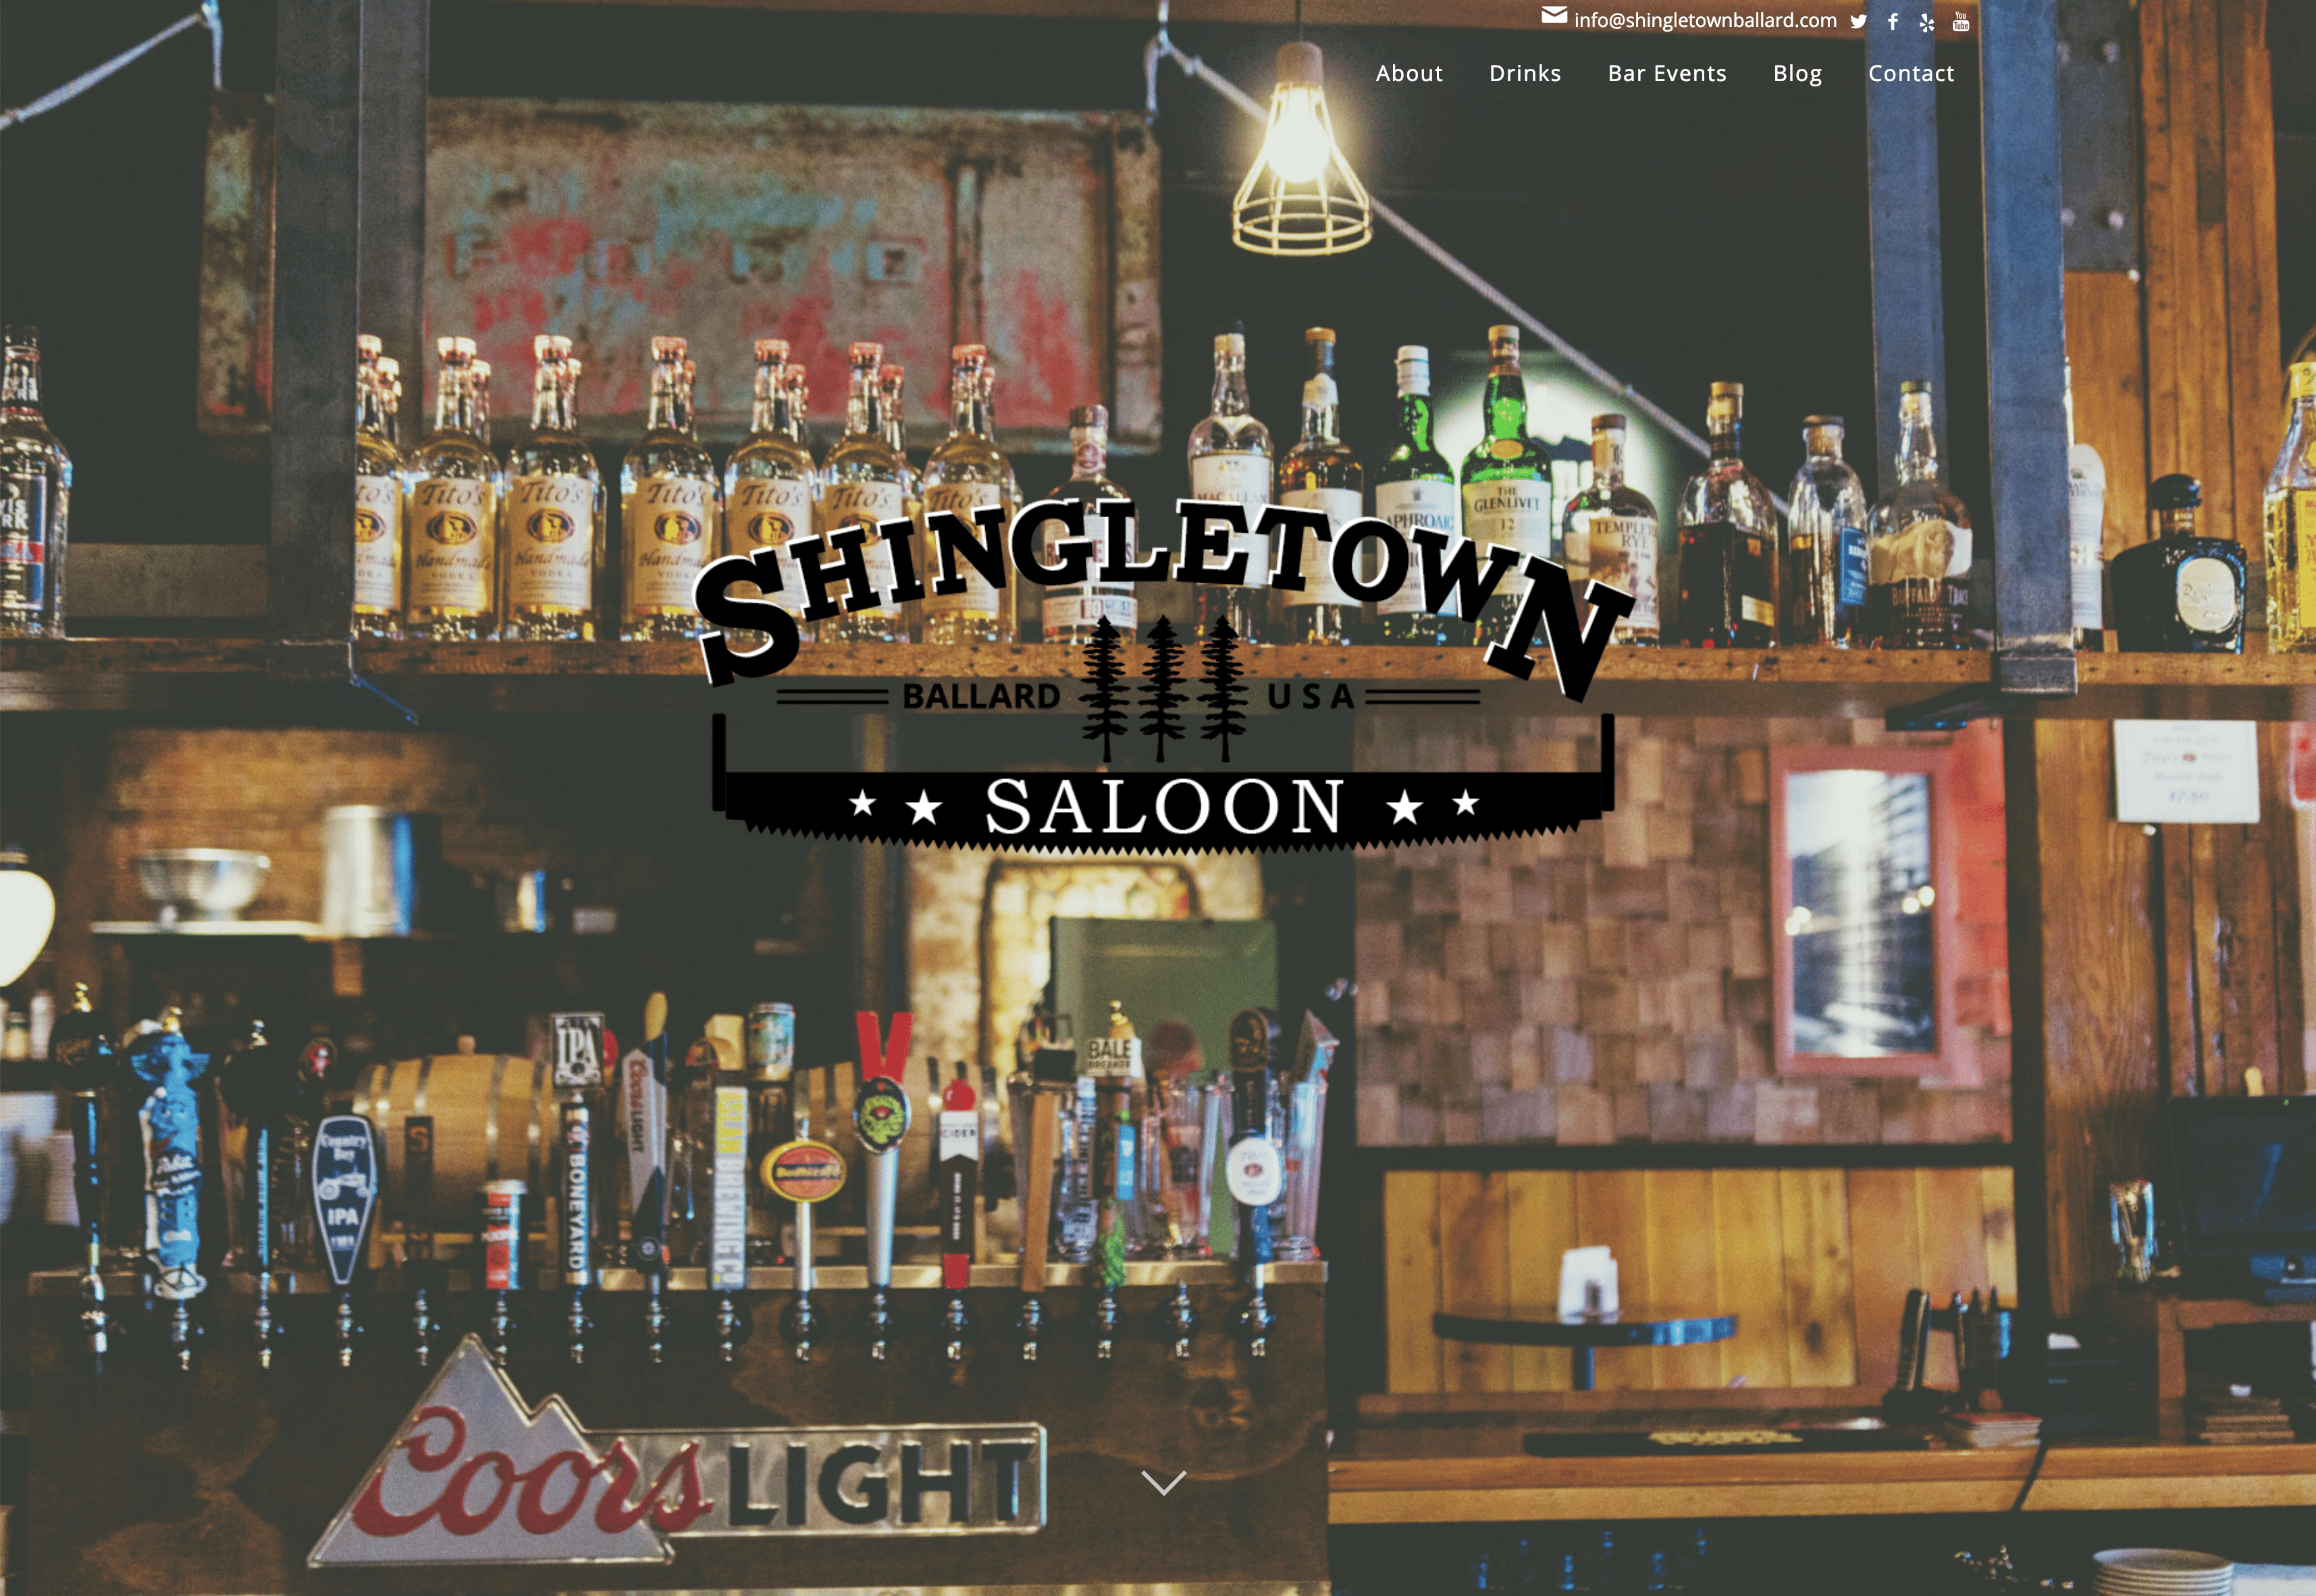 Screenshot of Shingletown Saloon's homepage